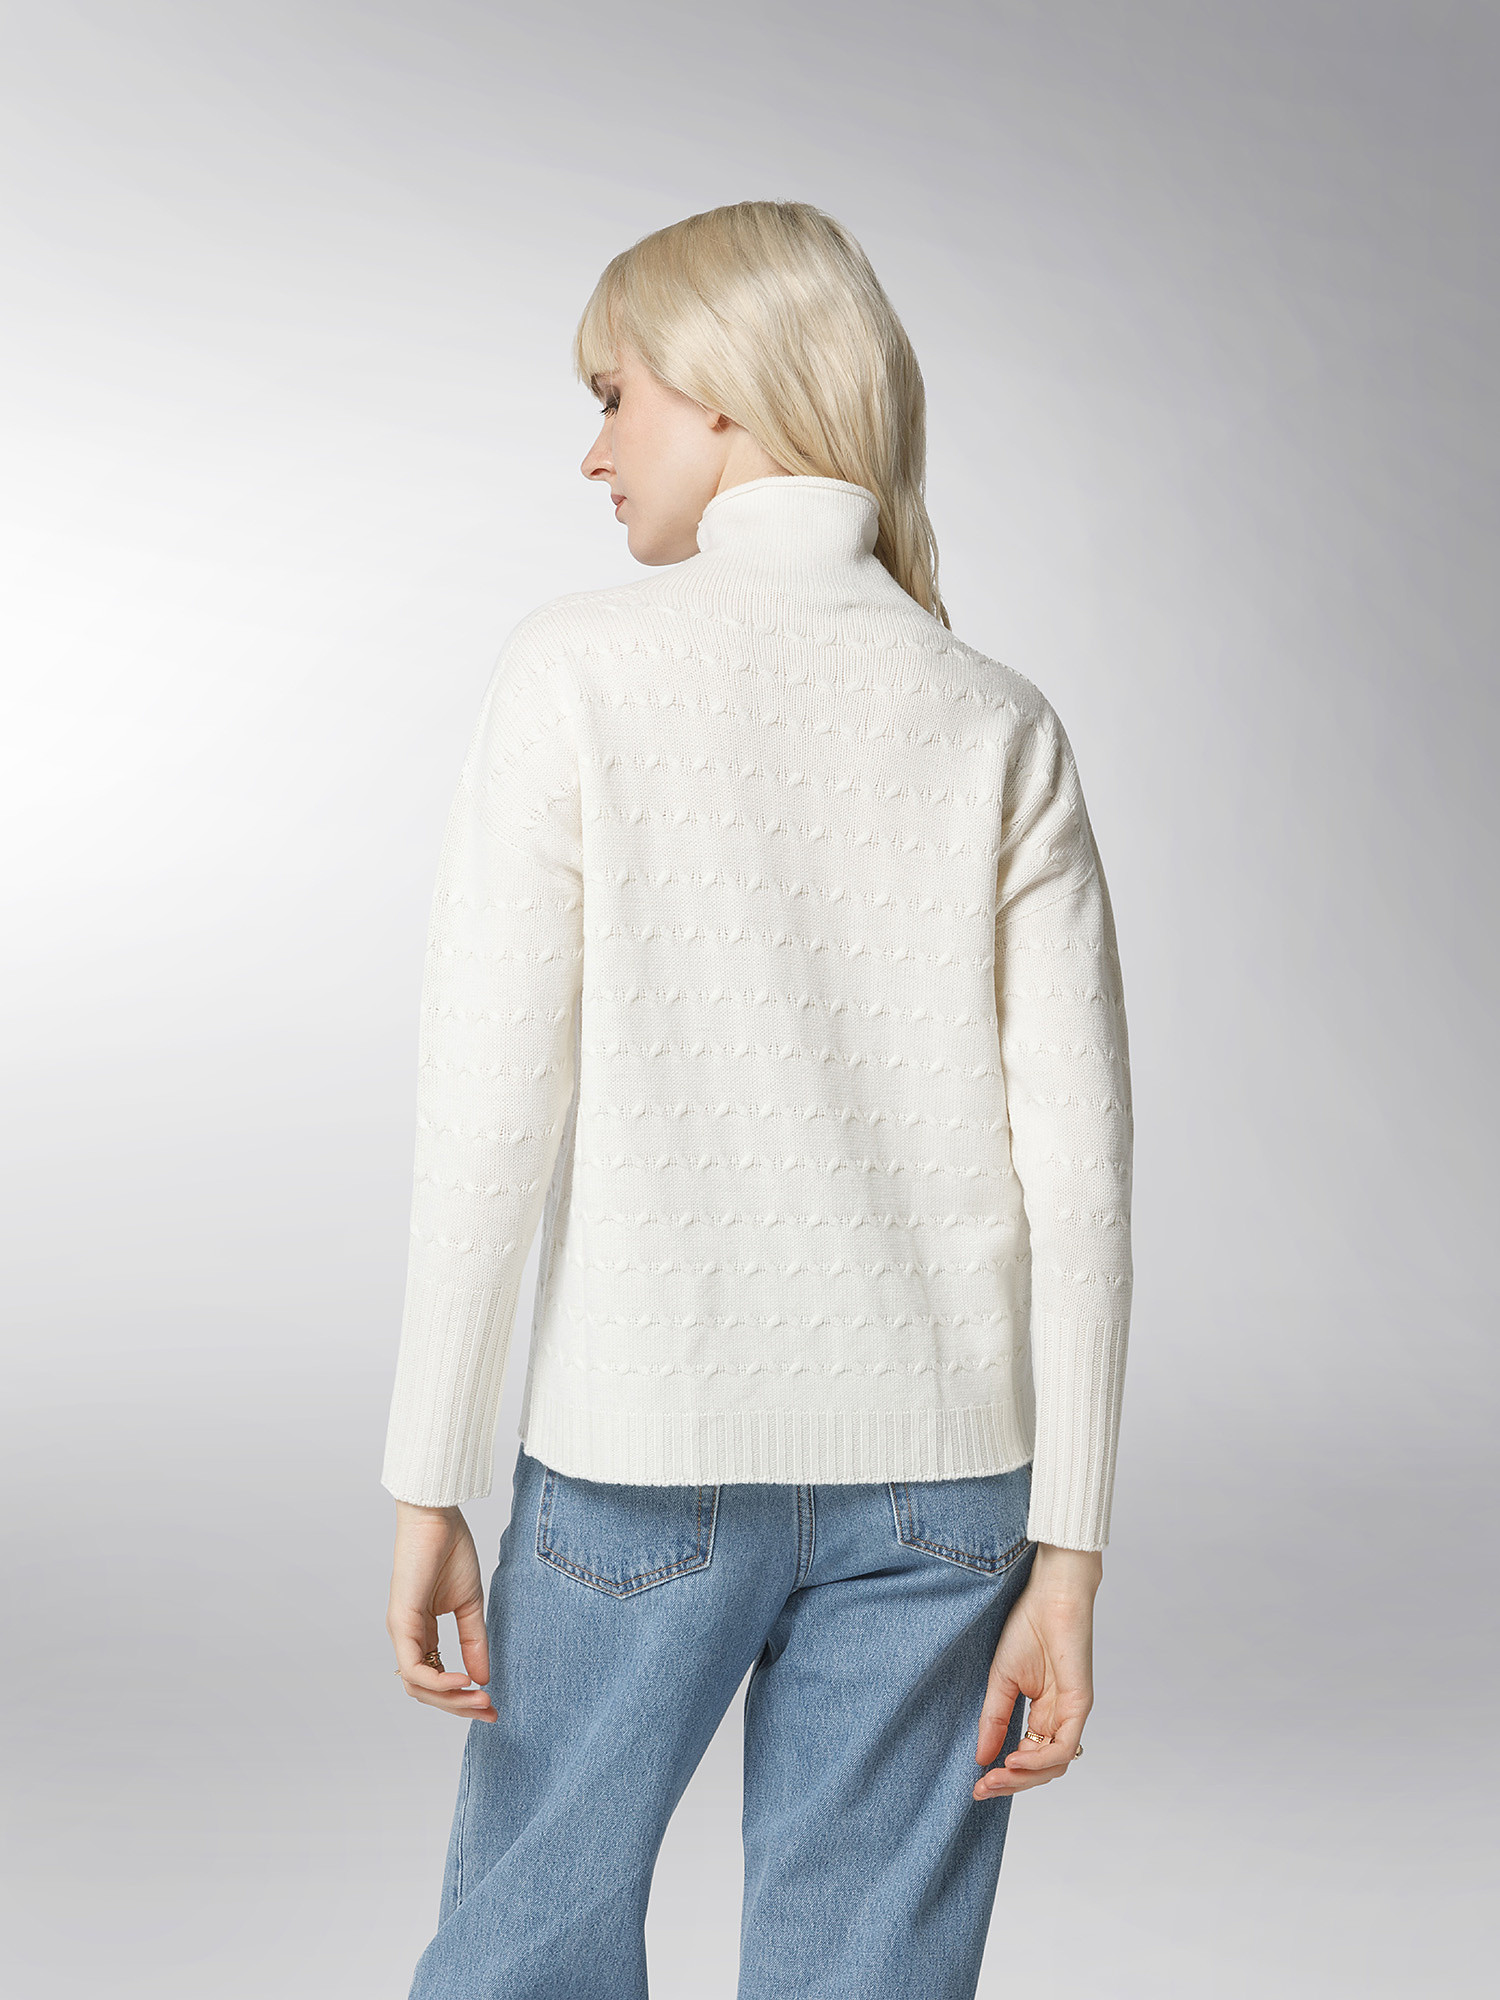 K Collection - Knitted turtleneck pullover, Ecru, large image number 5